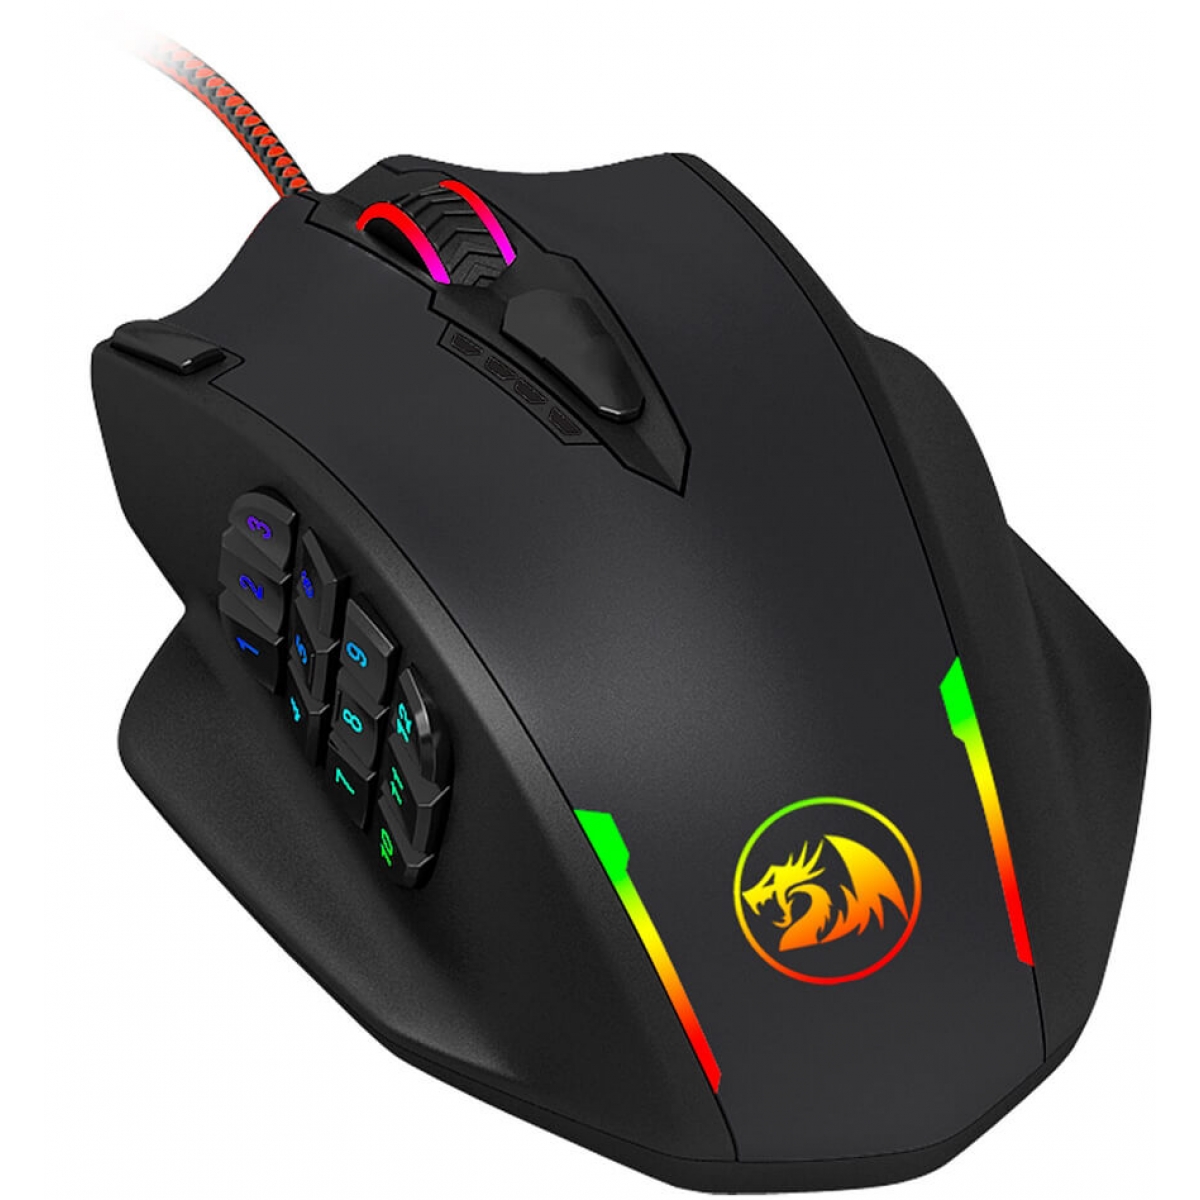 Mouse Gamer Redragon Impact M908 RGB, 12400 DPI, 12 botões programáveis, Black